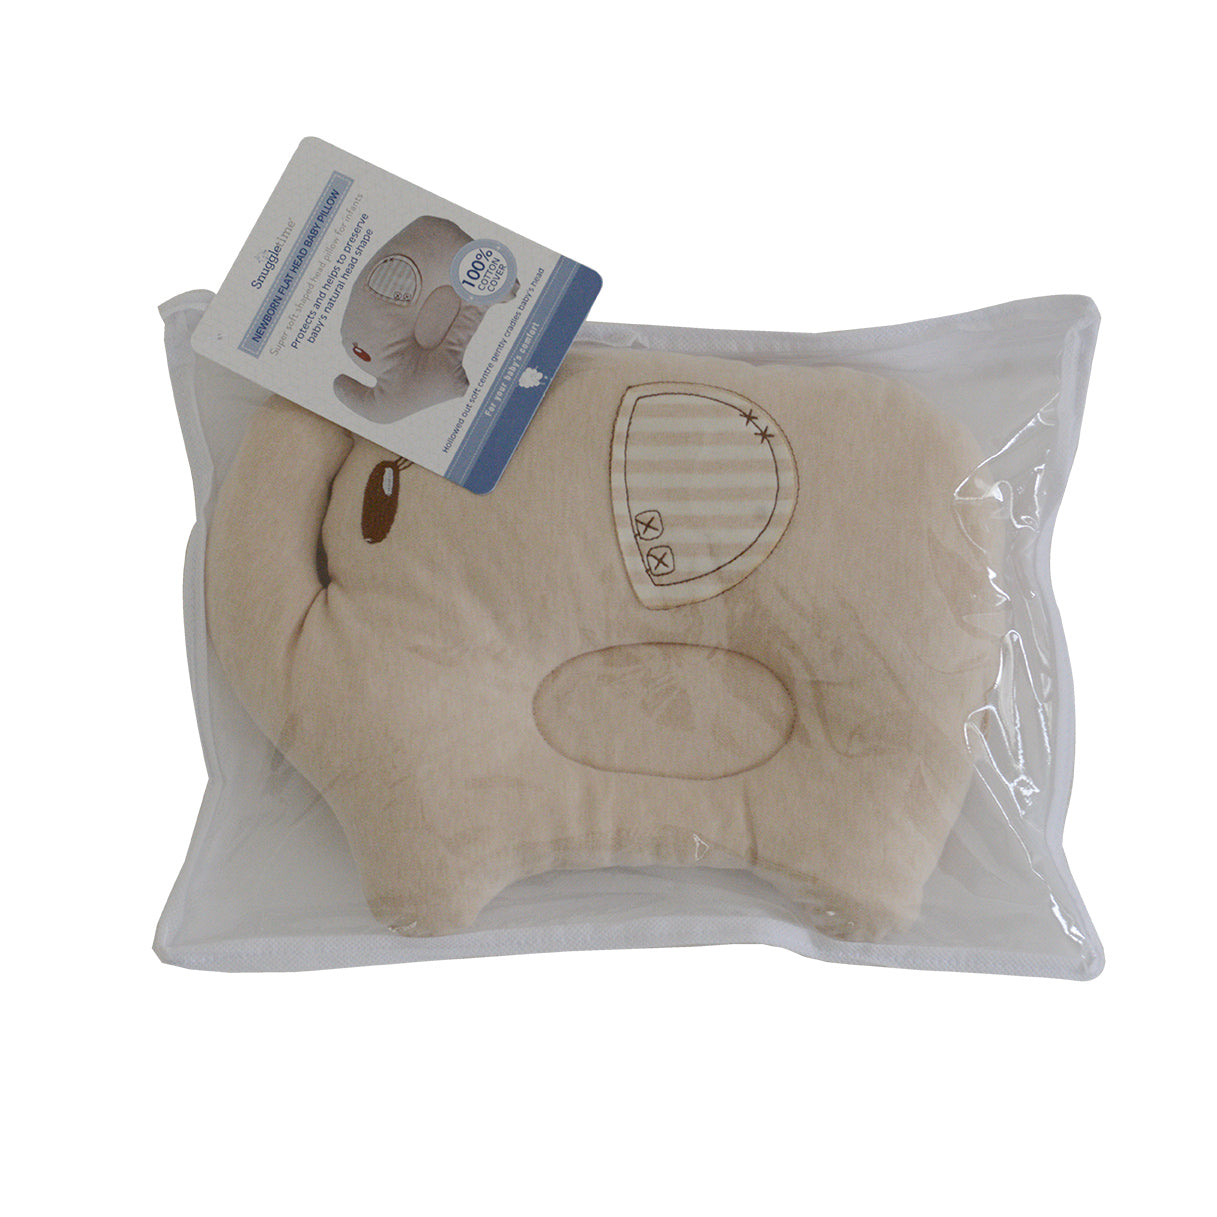 Snuggletime Newborn Flat Head Baby Pillow